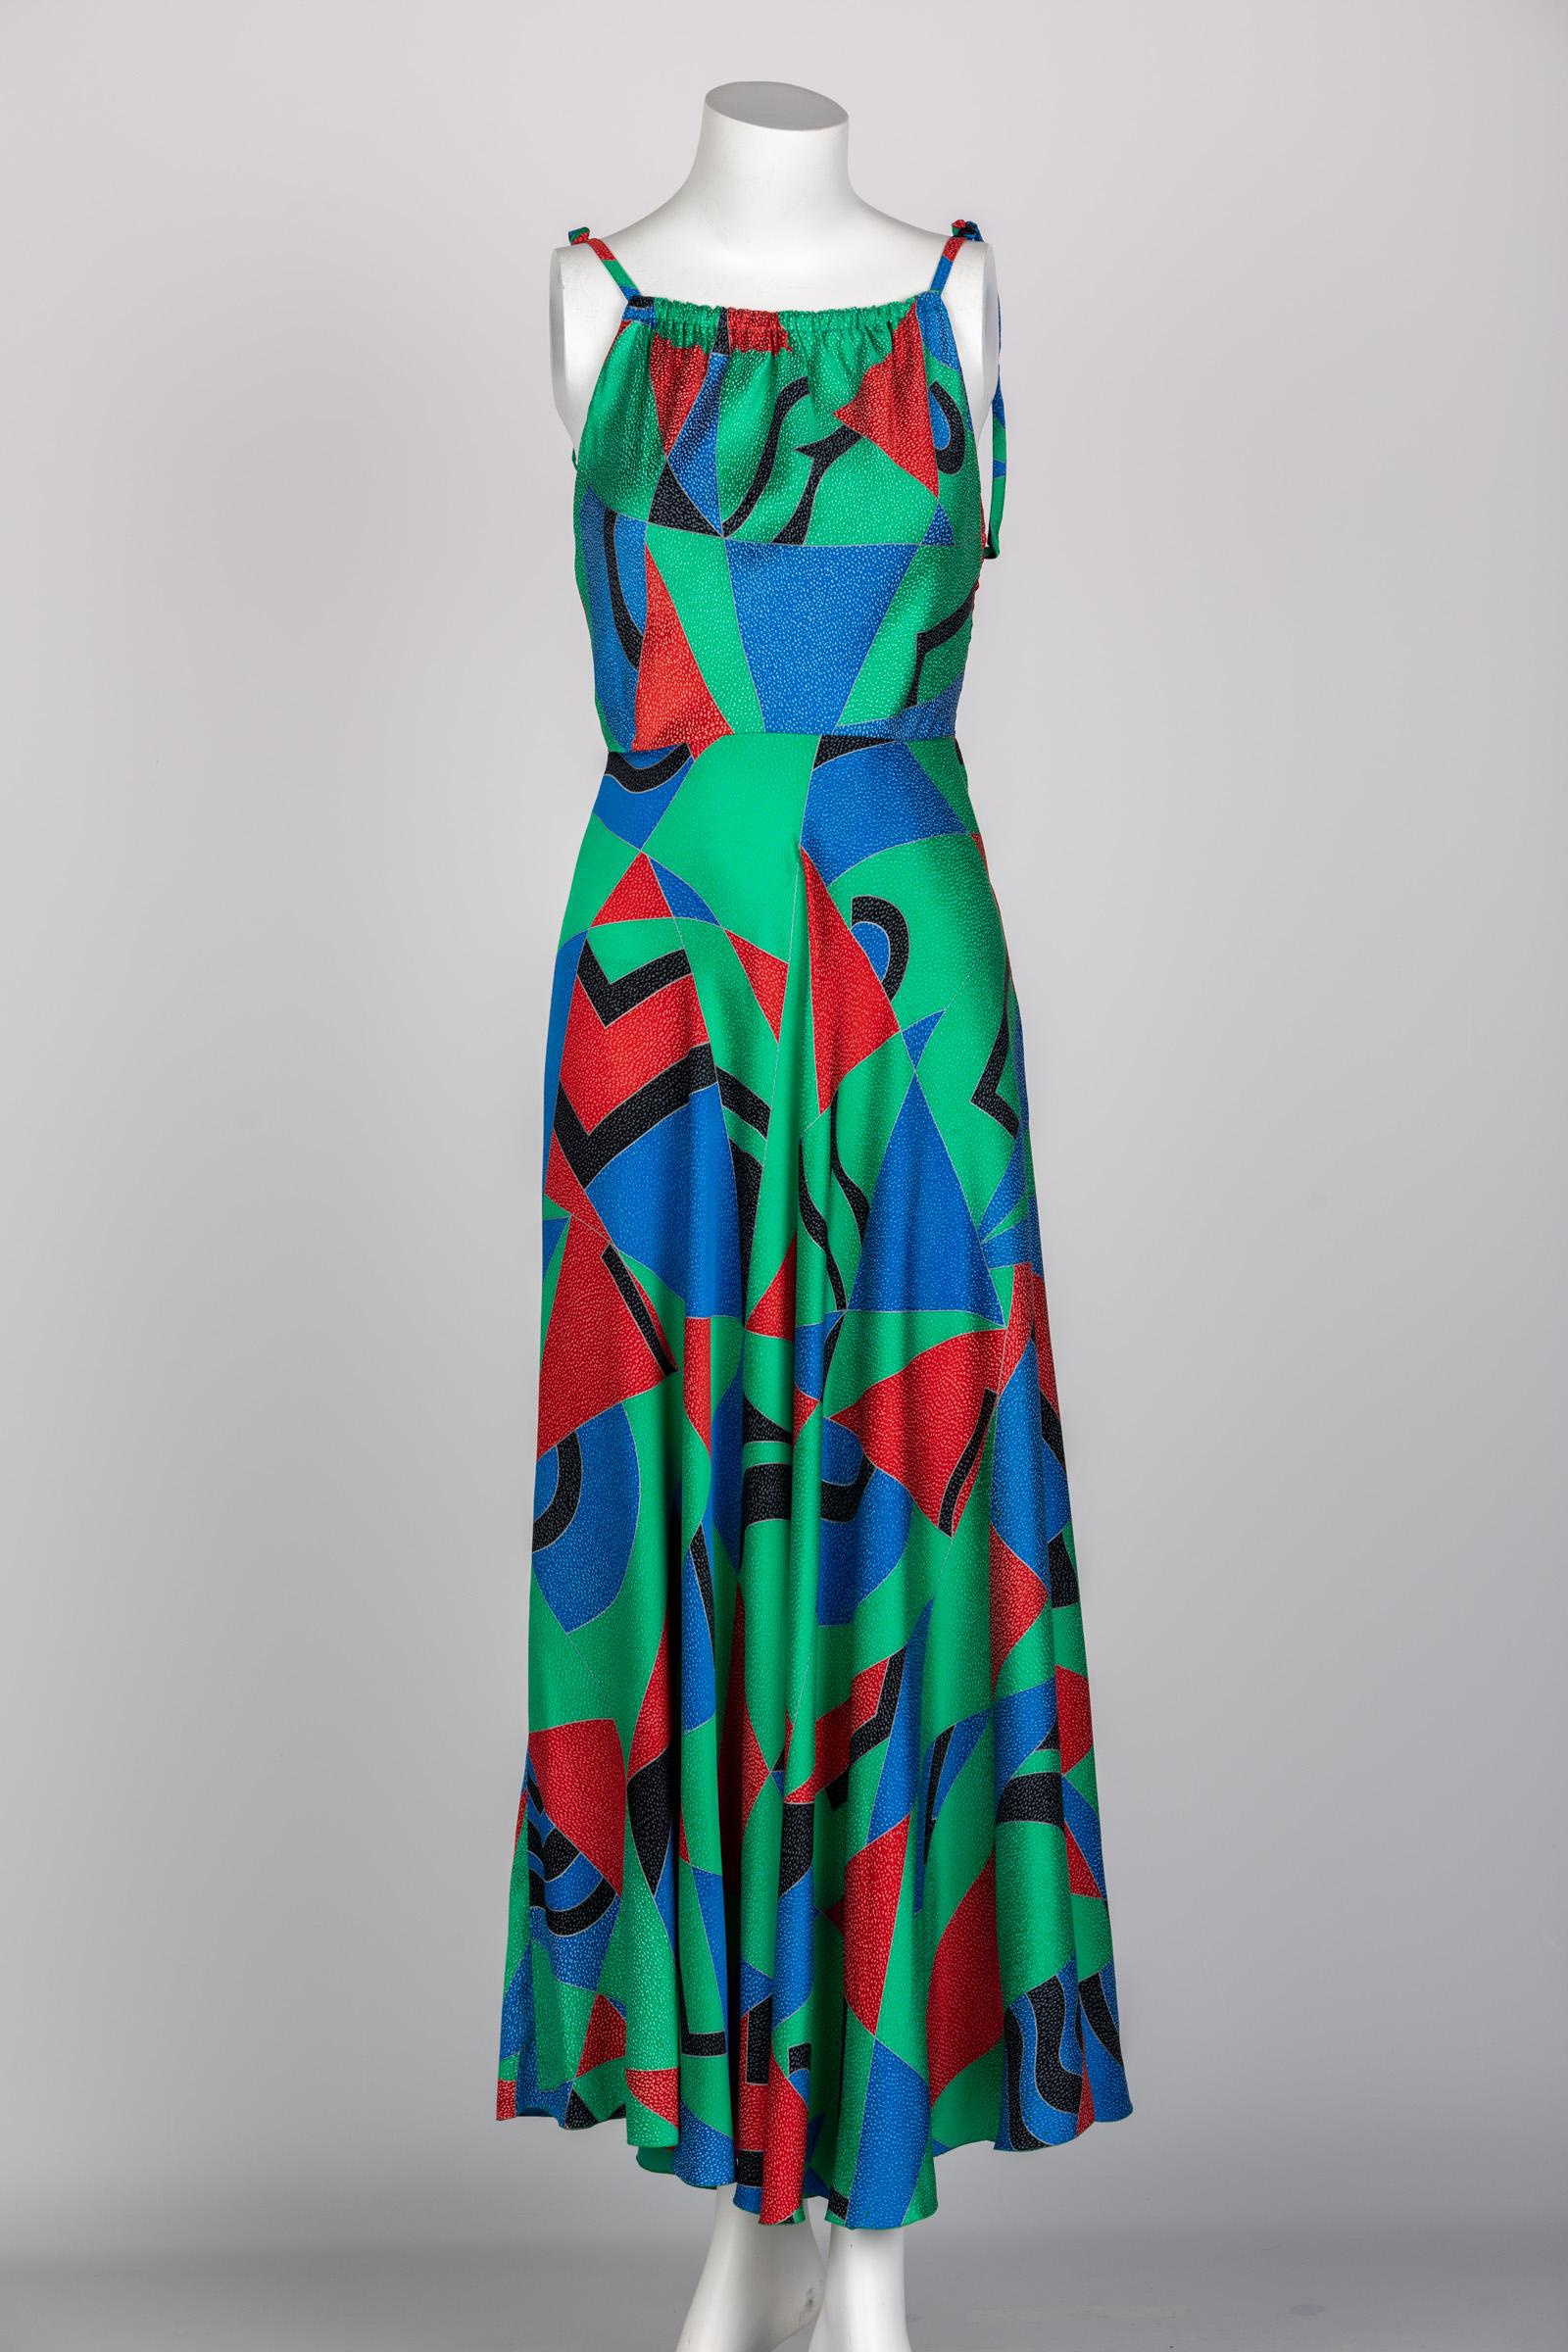 Chloe Karl Lagerfeld Cubist Green Silk Print Sleeveless Dress, 1970s In Good Condition For Sale In Boca Raton, FL